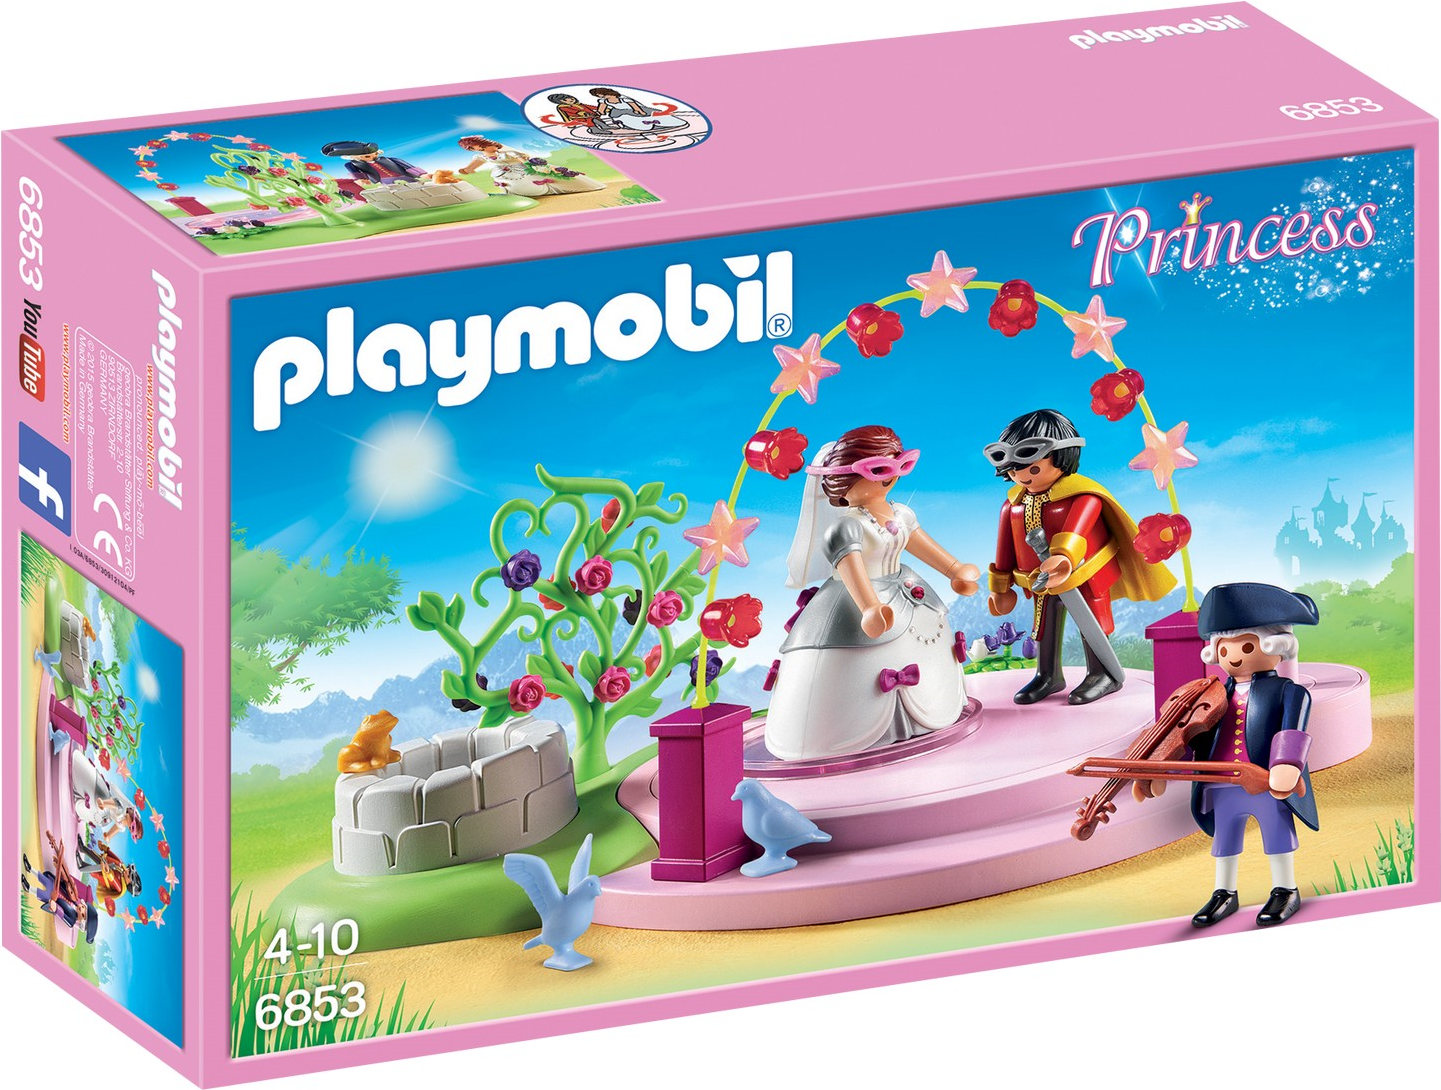 Playmobil Princess 6853 - Aktion/Abenteuer - Mädchen - Pink (6853)